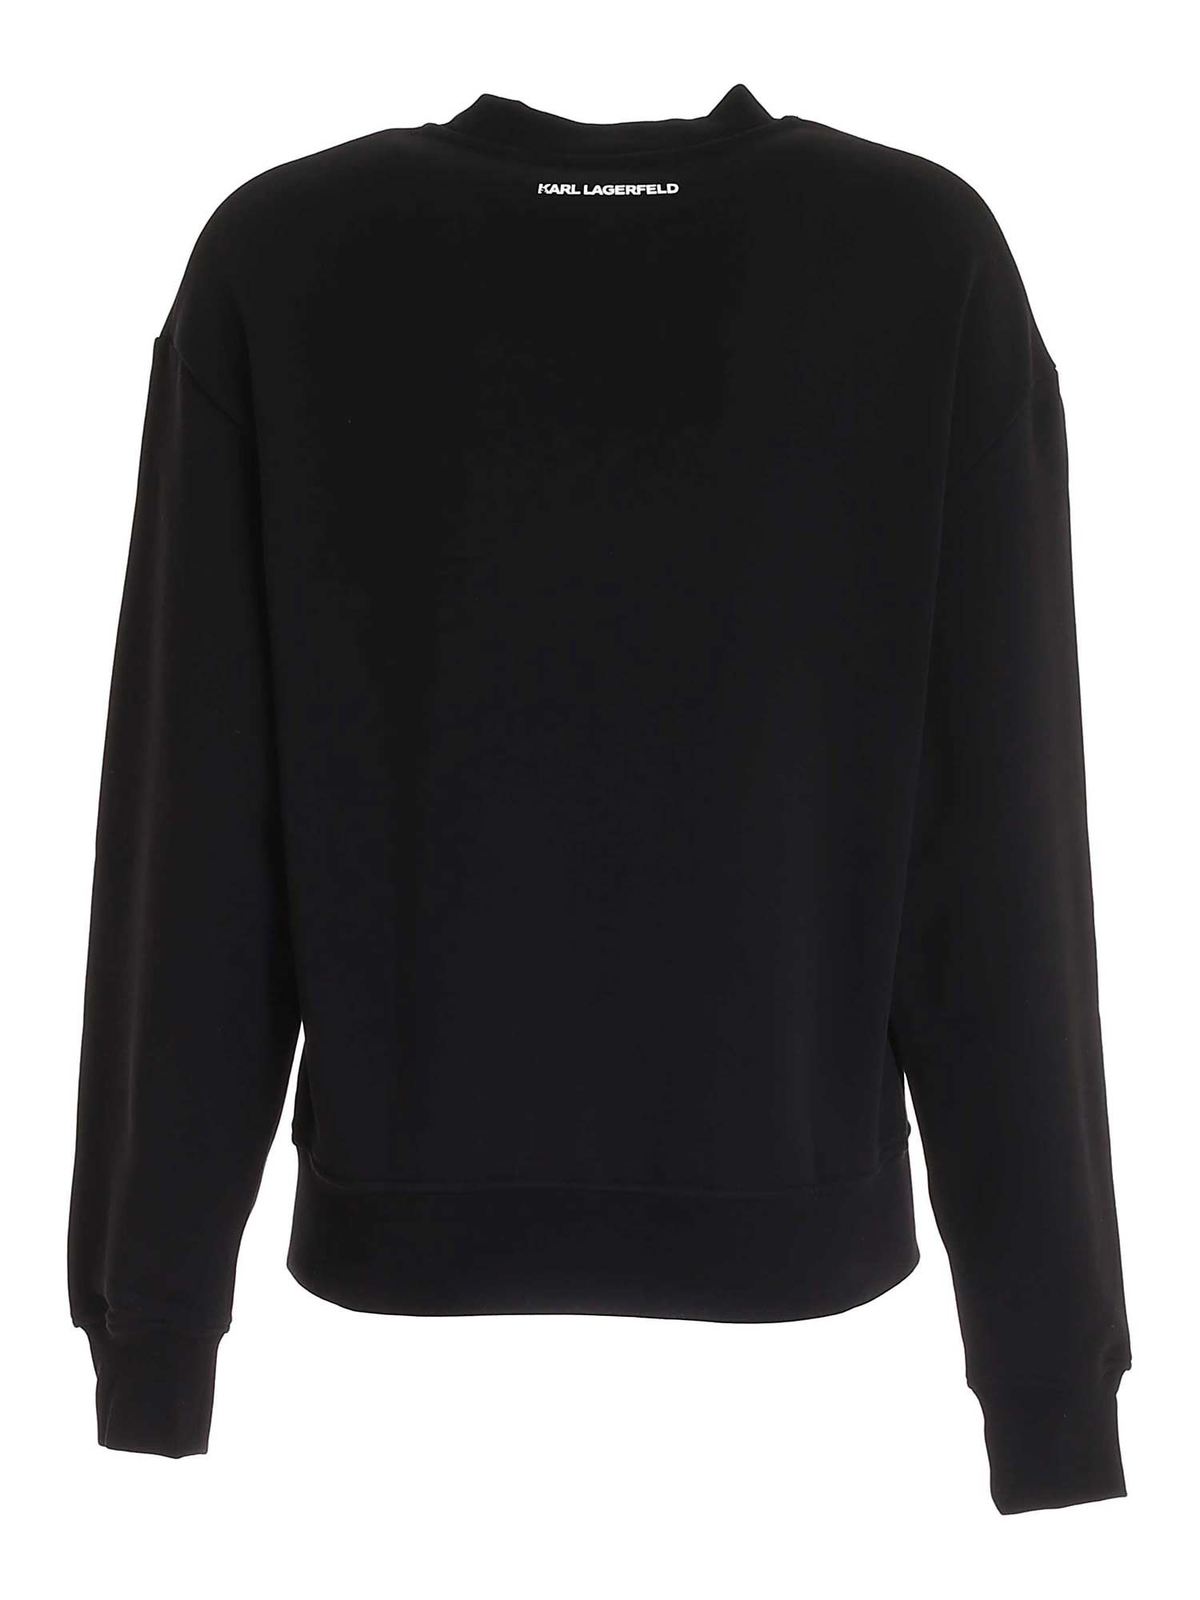 Karl Lagerfeld - Unisex Logo sweatshirt in black - Sweatshirts ...